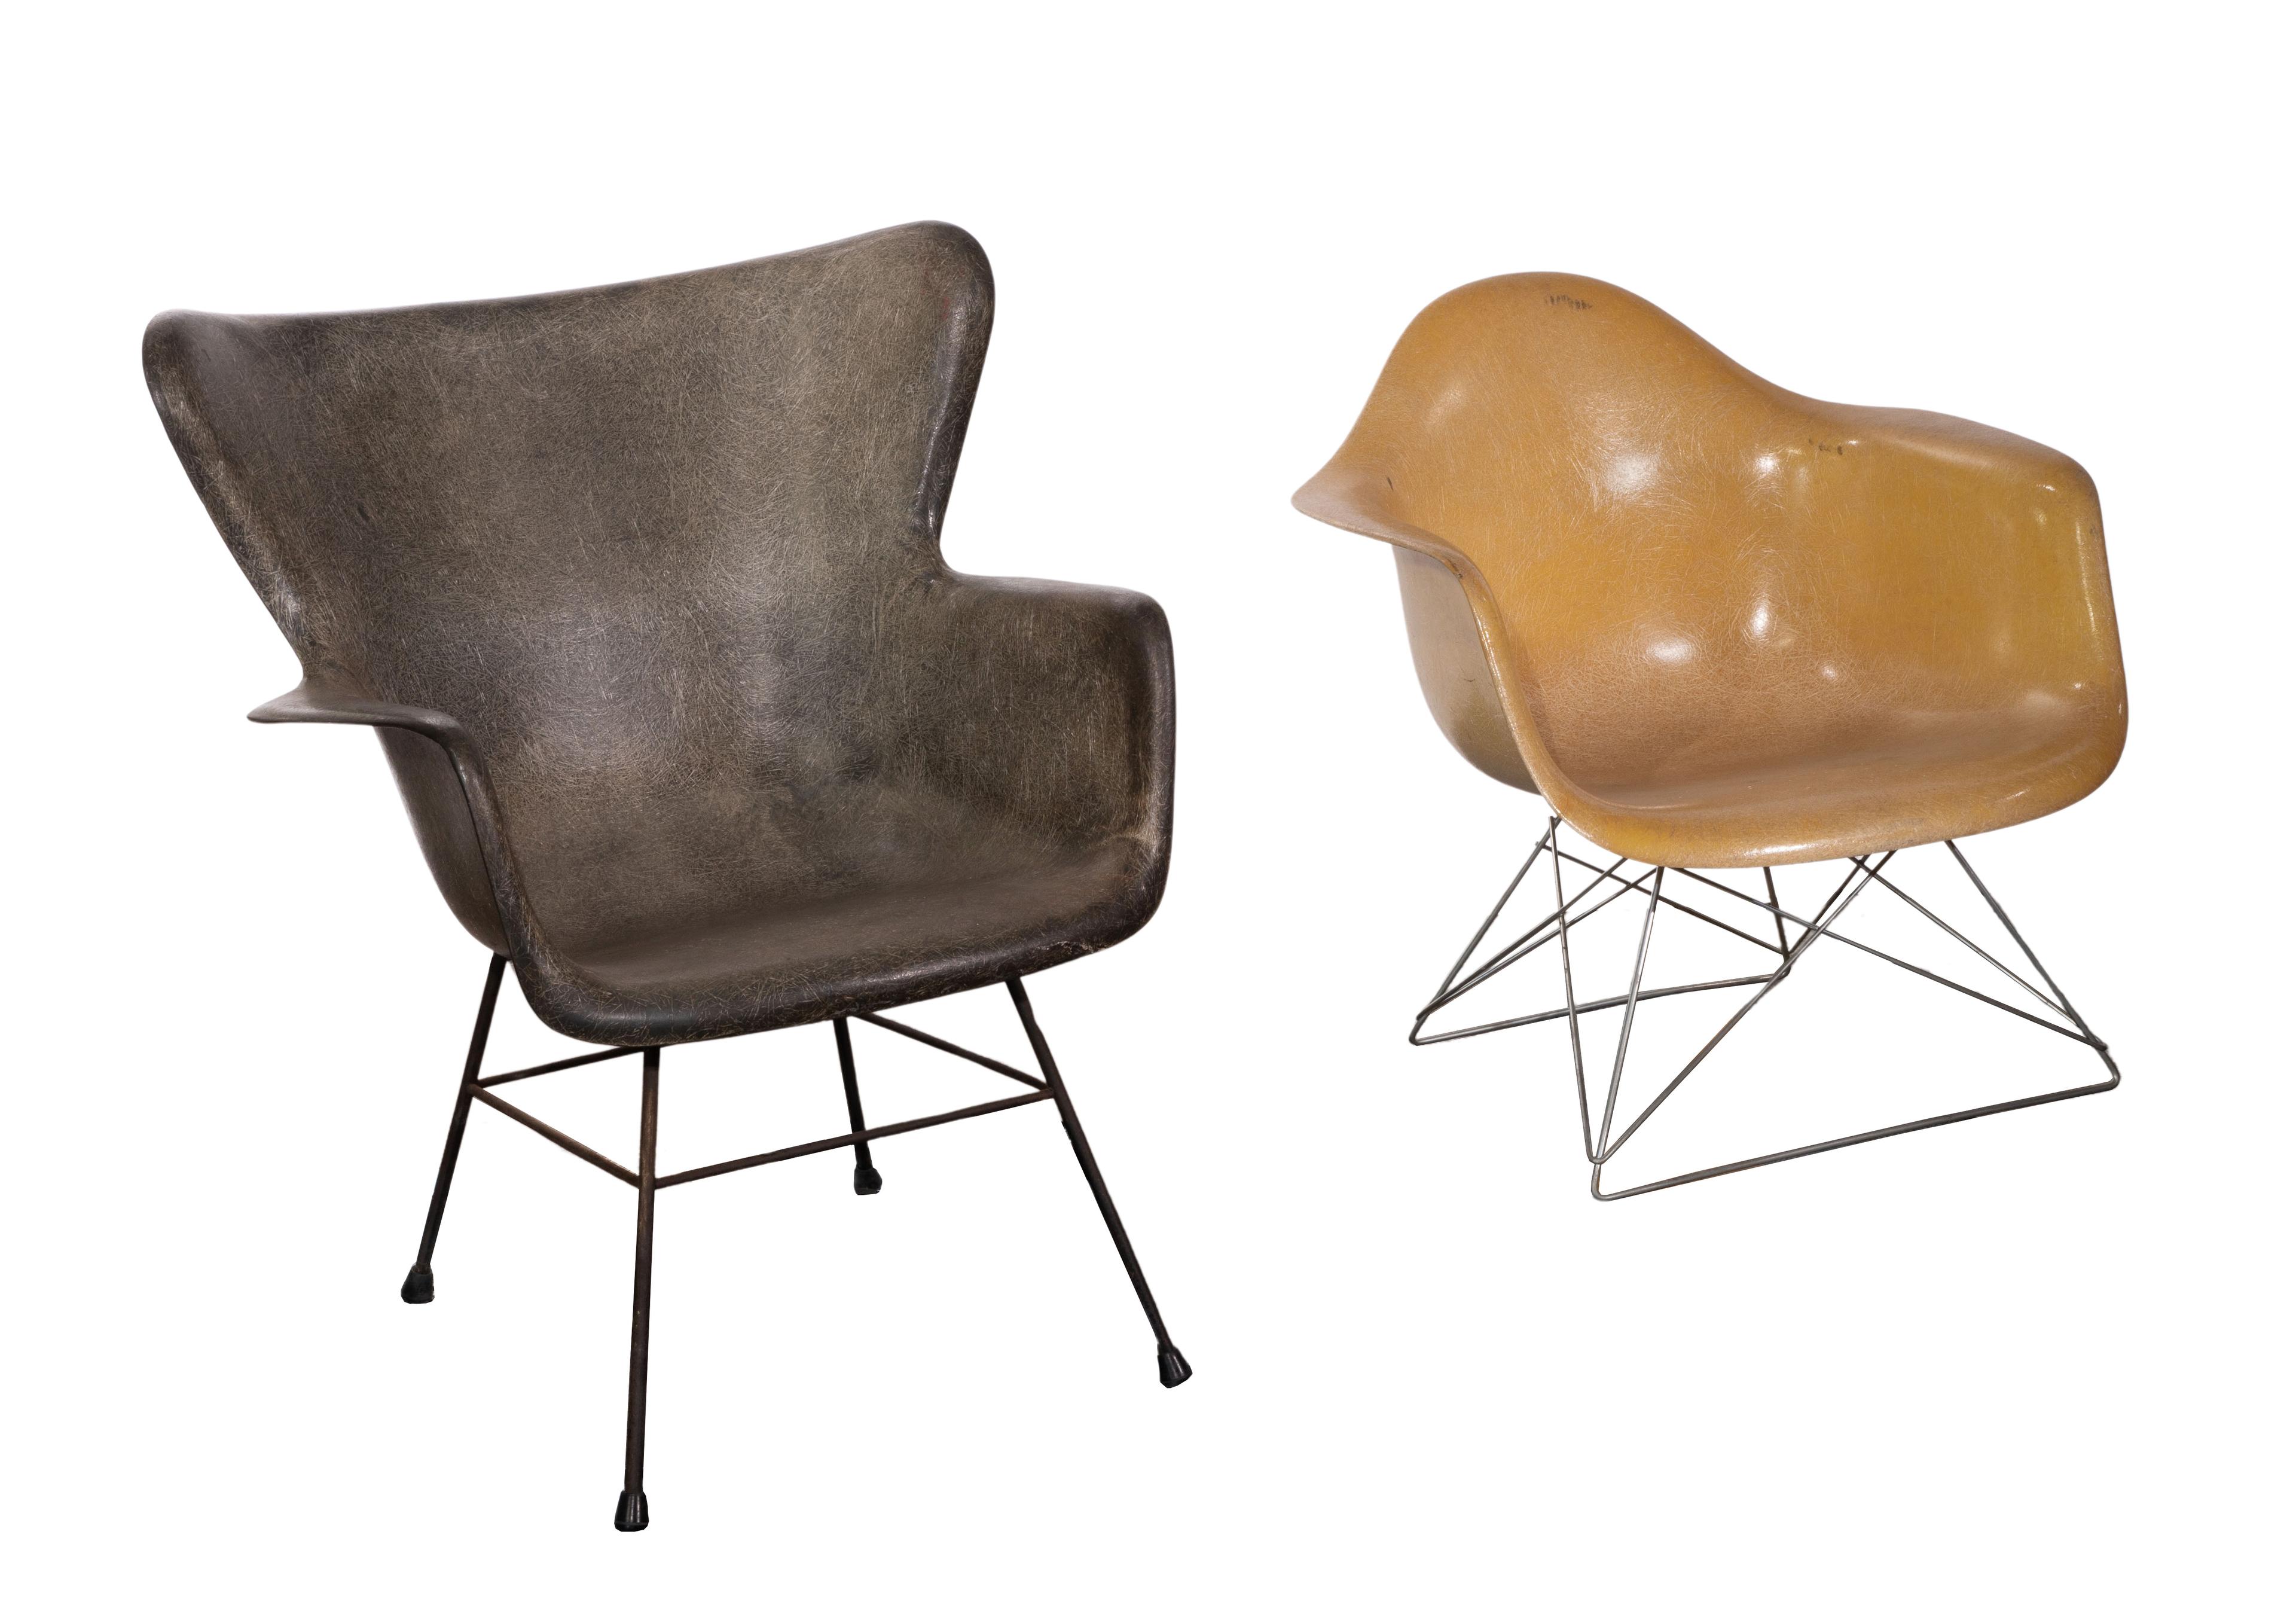 Eames Fiberglass Shell Chair Collection